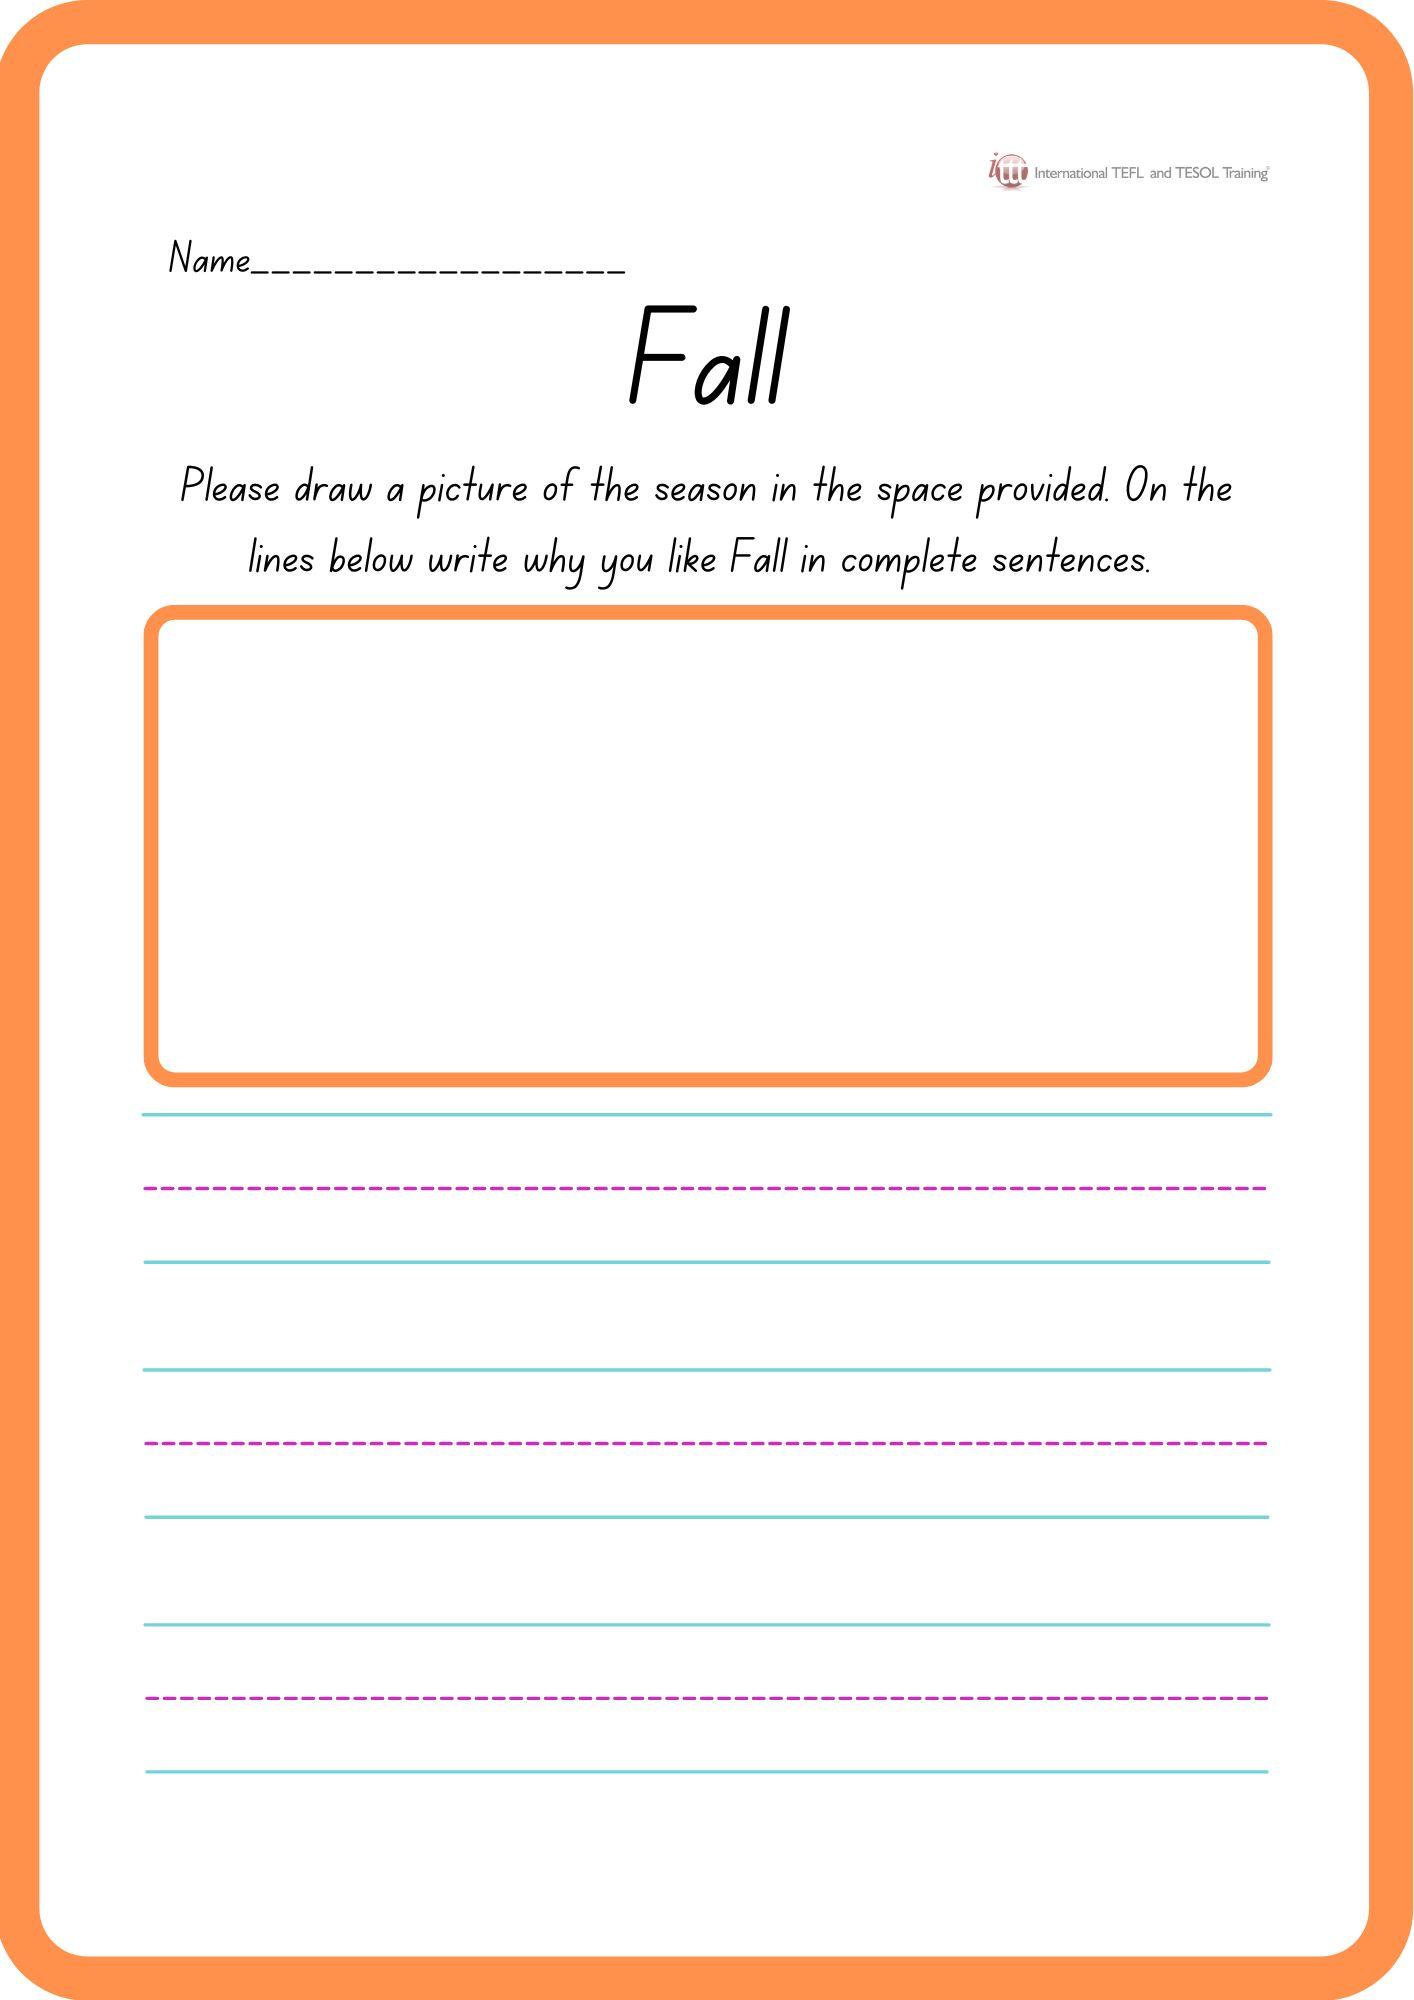 Grammar corner Fall Season EFL Worksheet